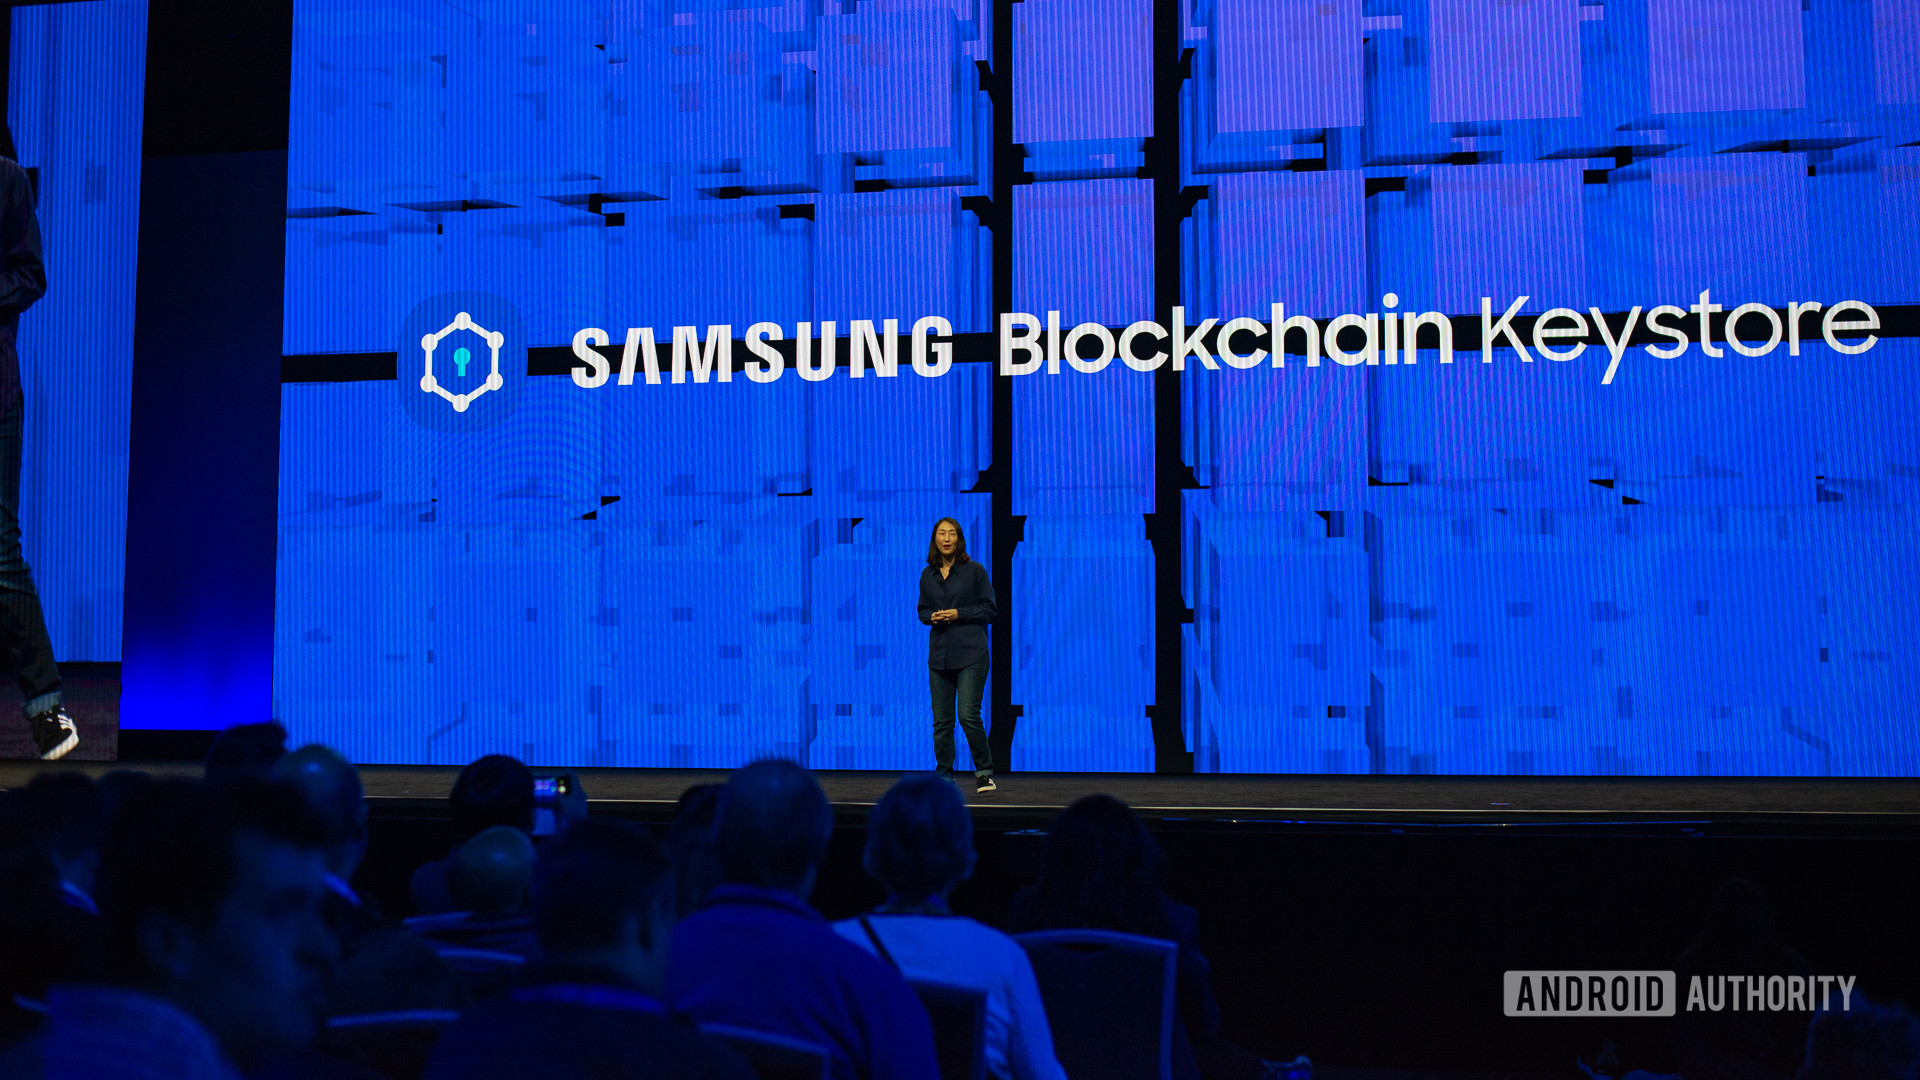 Samsung Blockchain Keystore at Samsung Developer Conference 2019